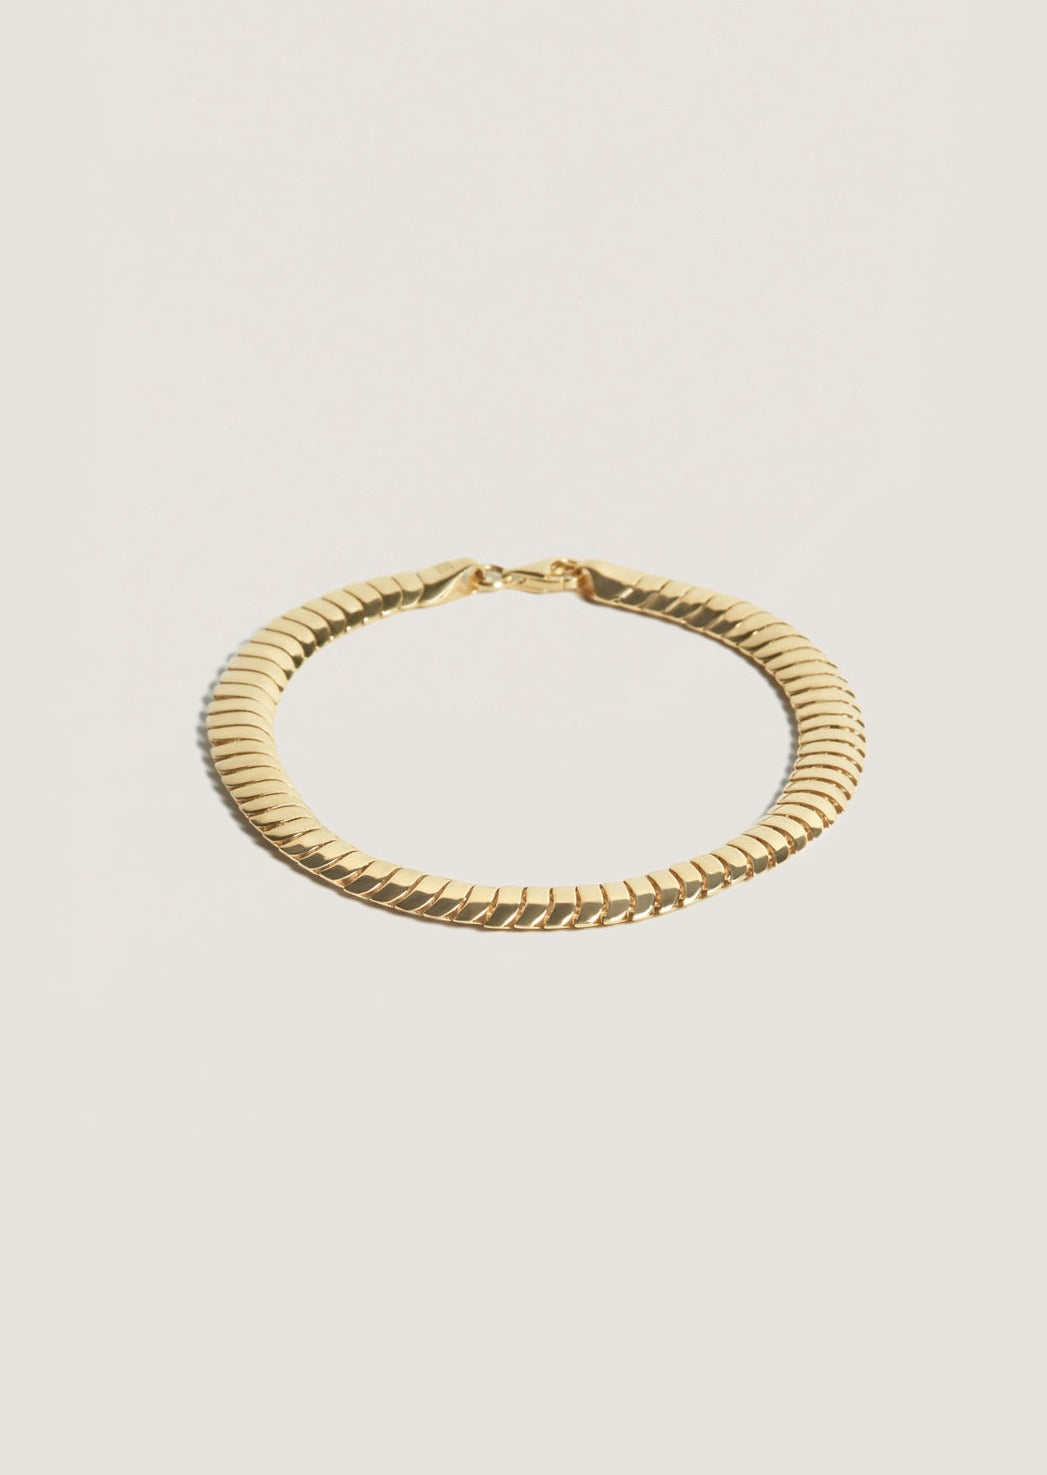 alt="Cobra Chain Bracelet I"